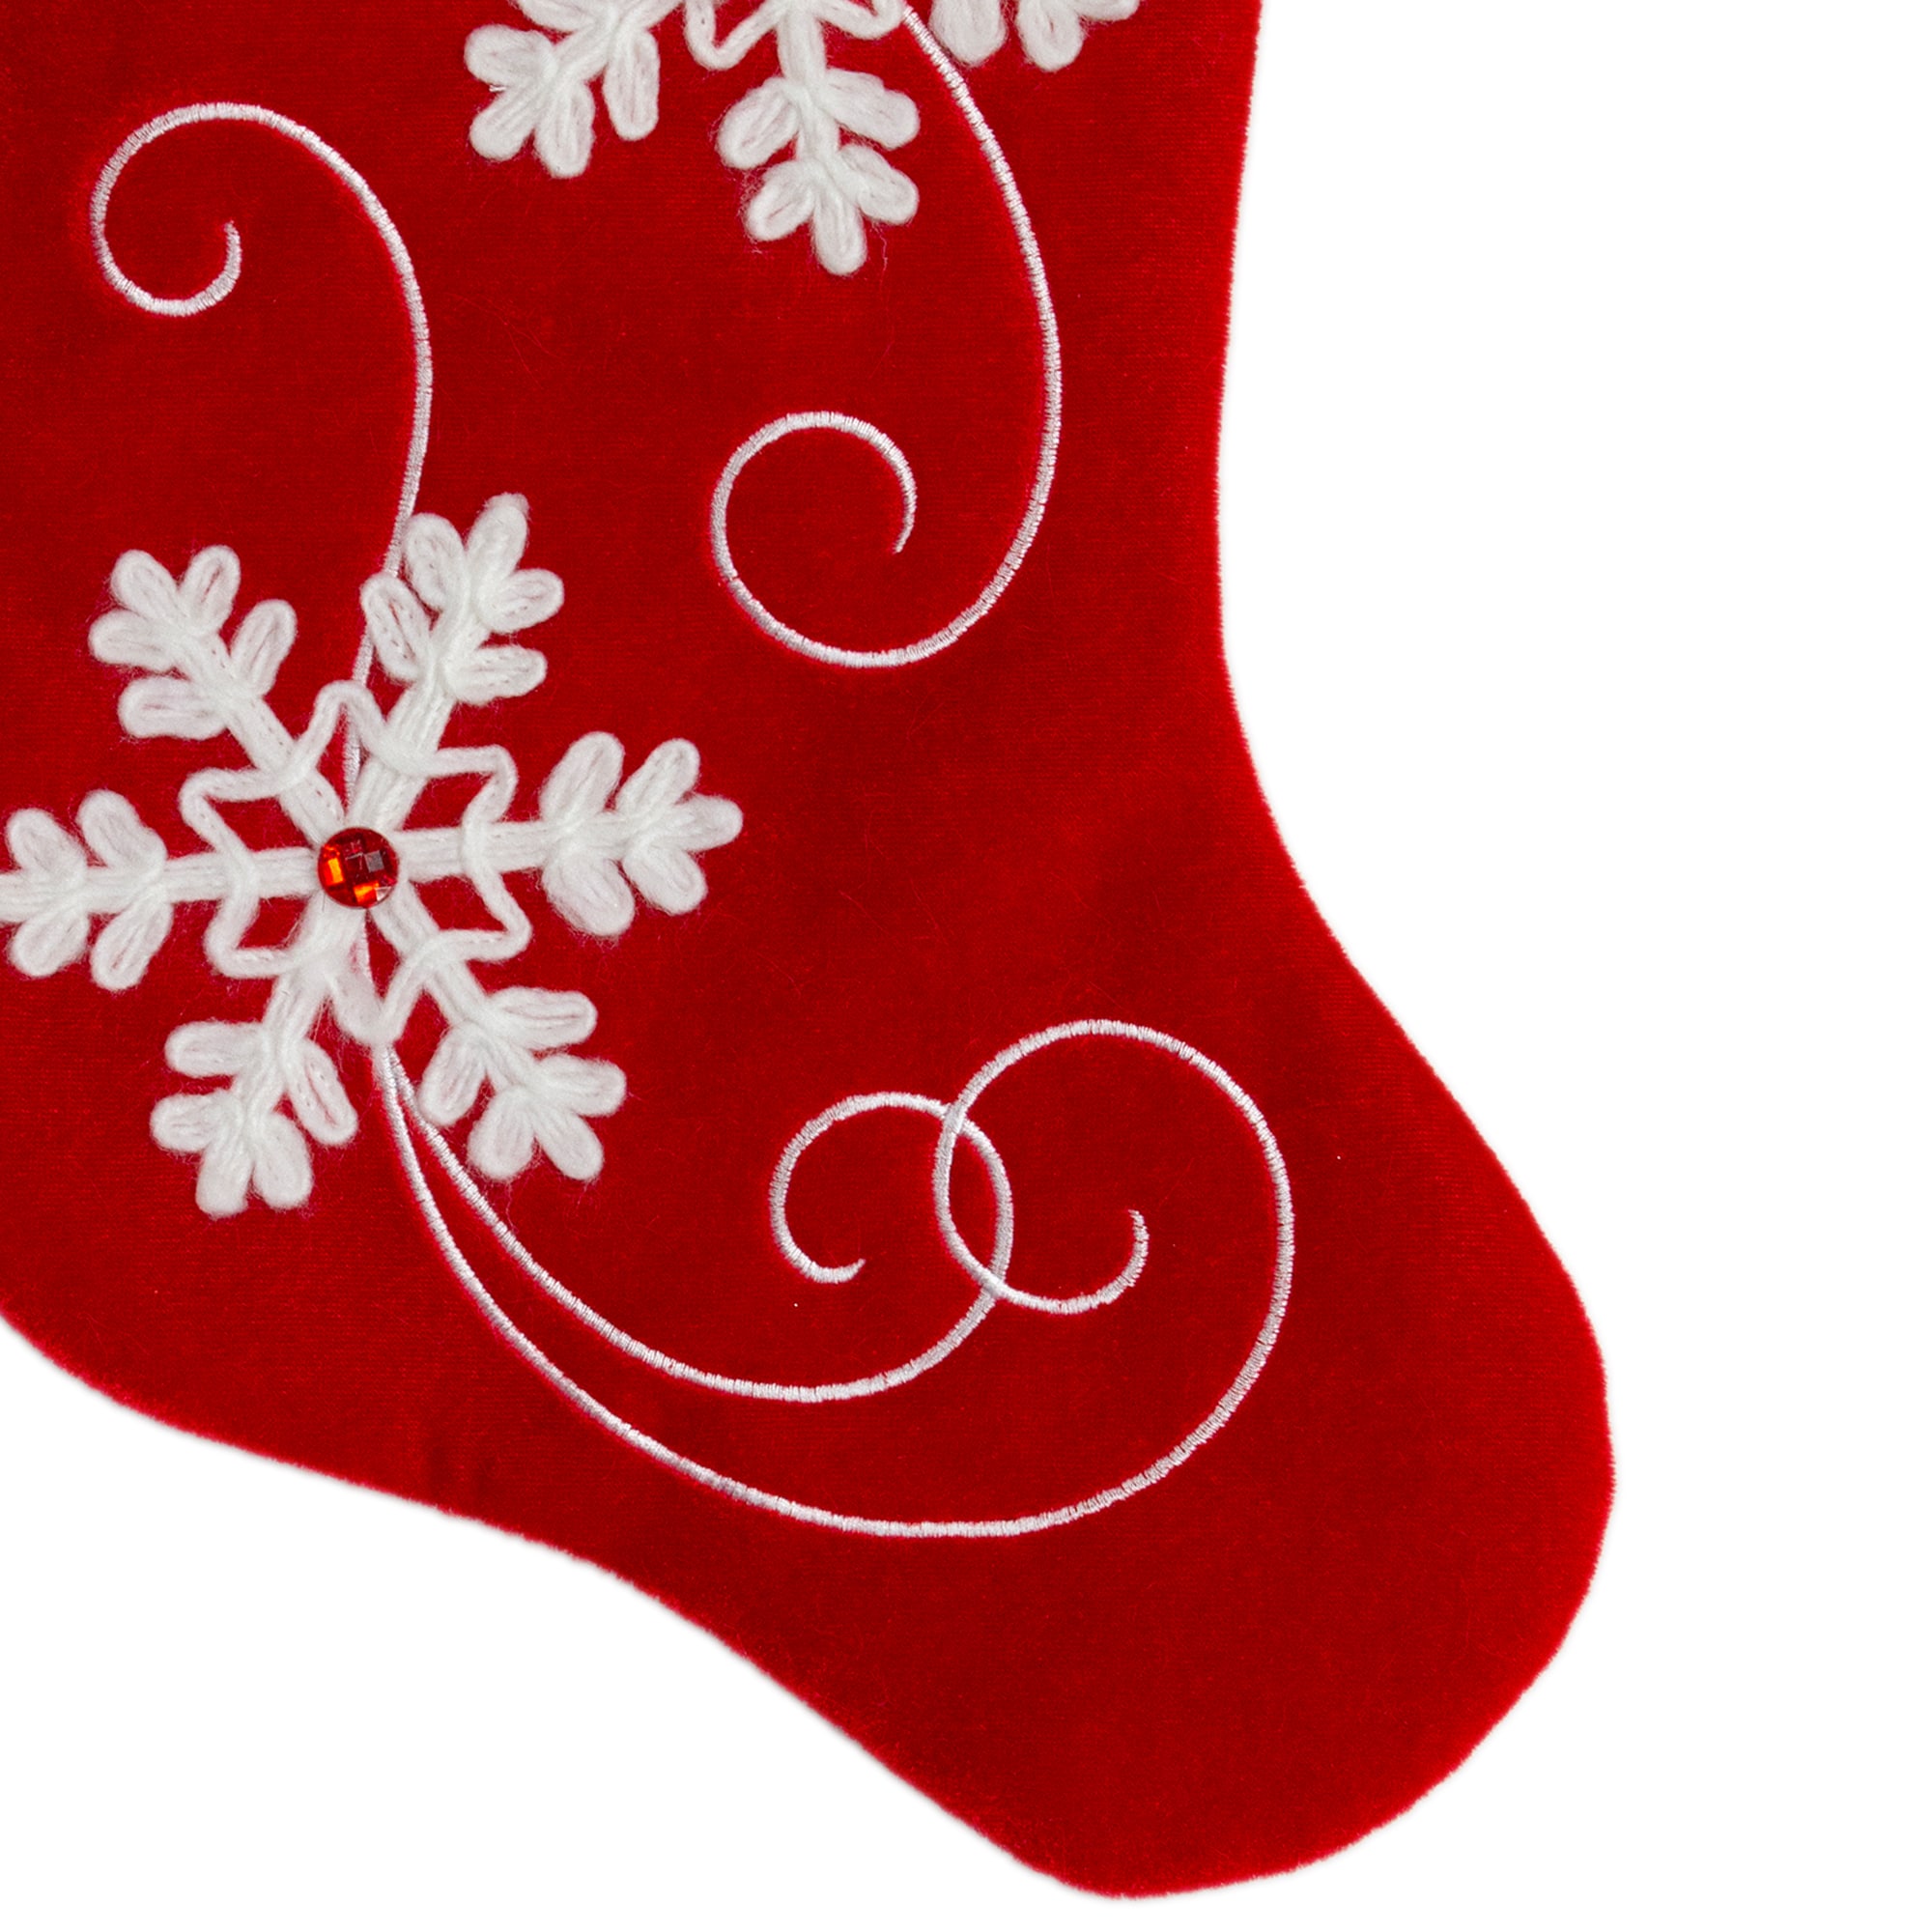 Red snowflake Christmas stocking